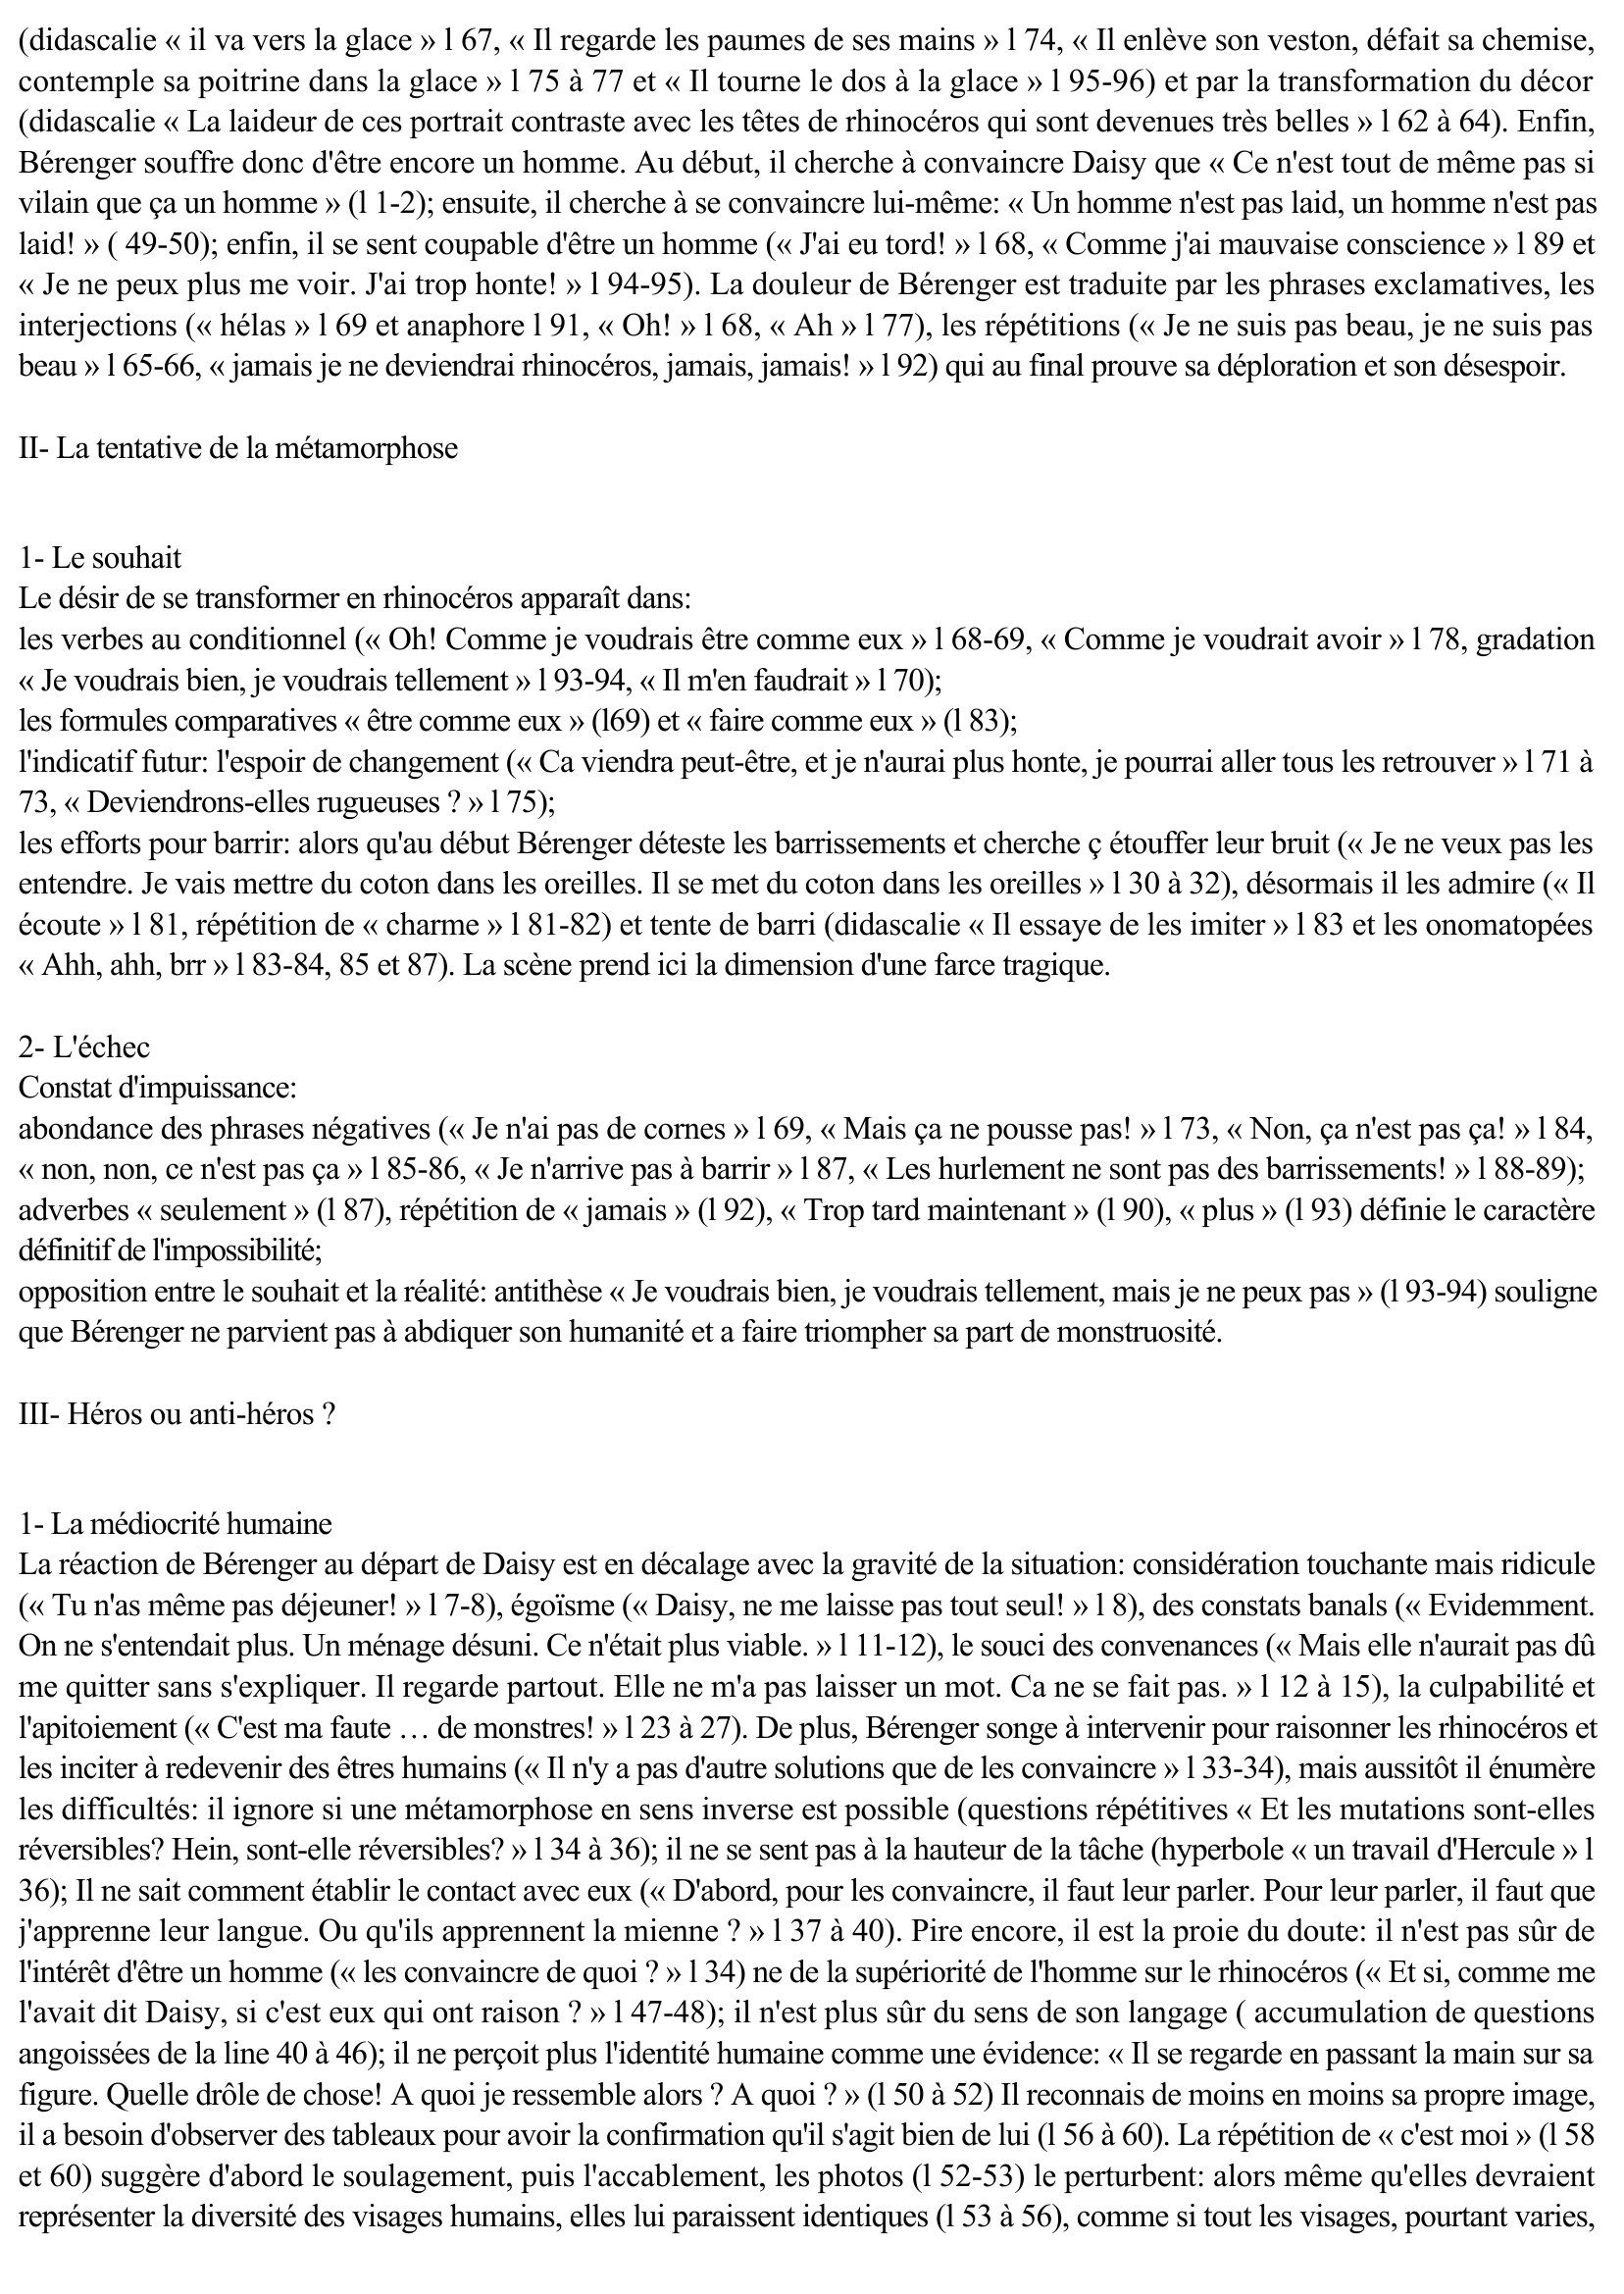 Prévisualisation du document Ionesco, Rhinocéros III Le monologue final